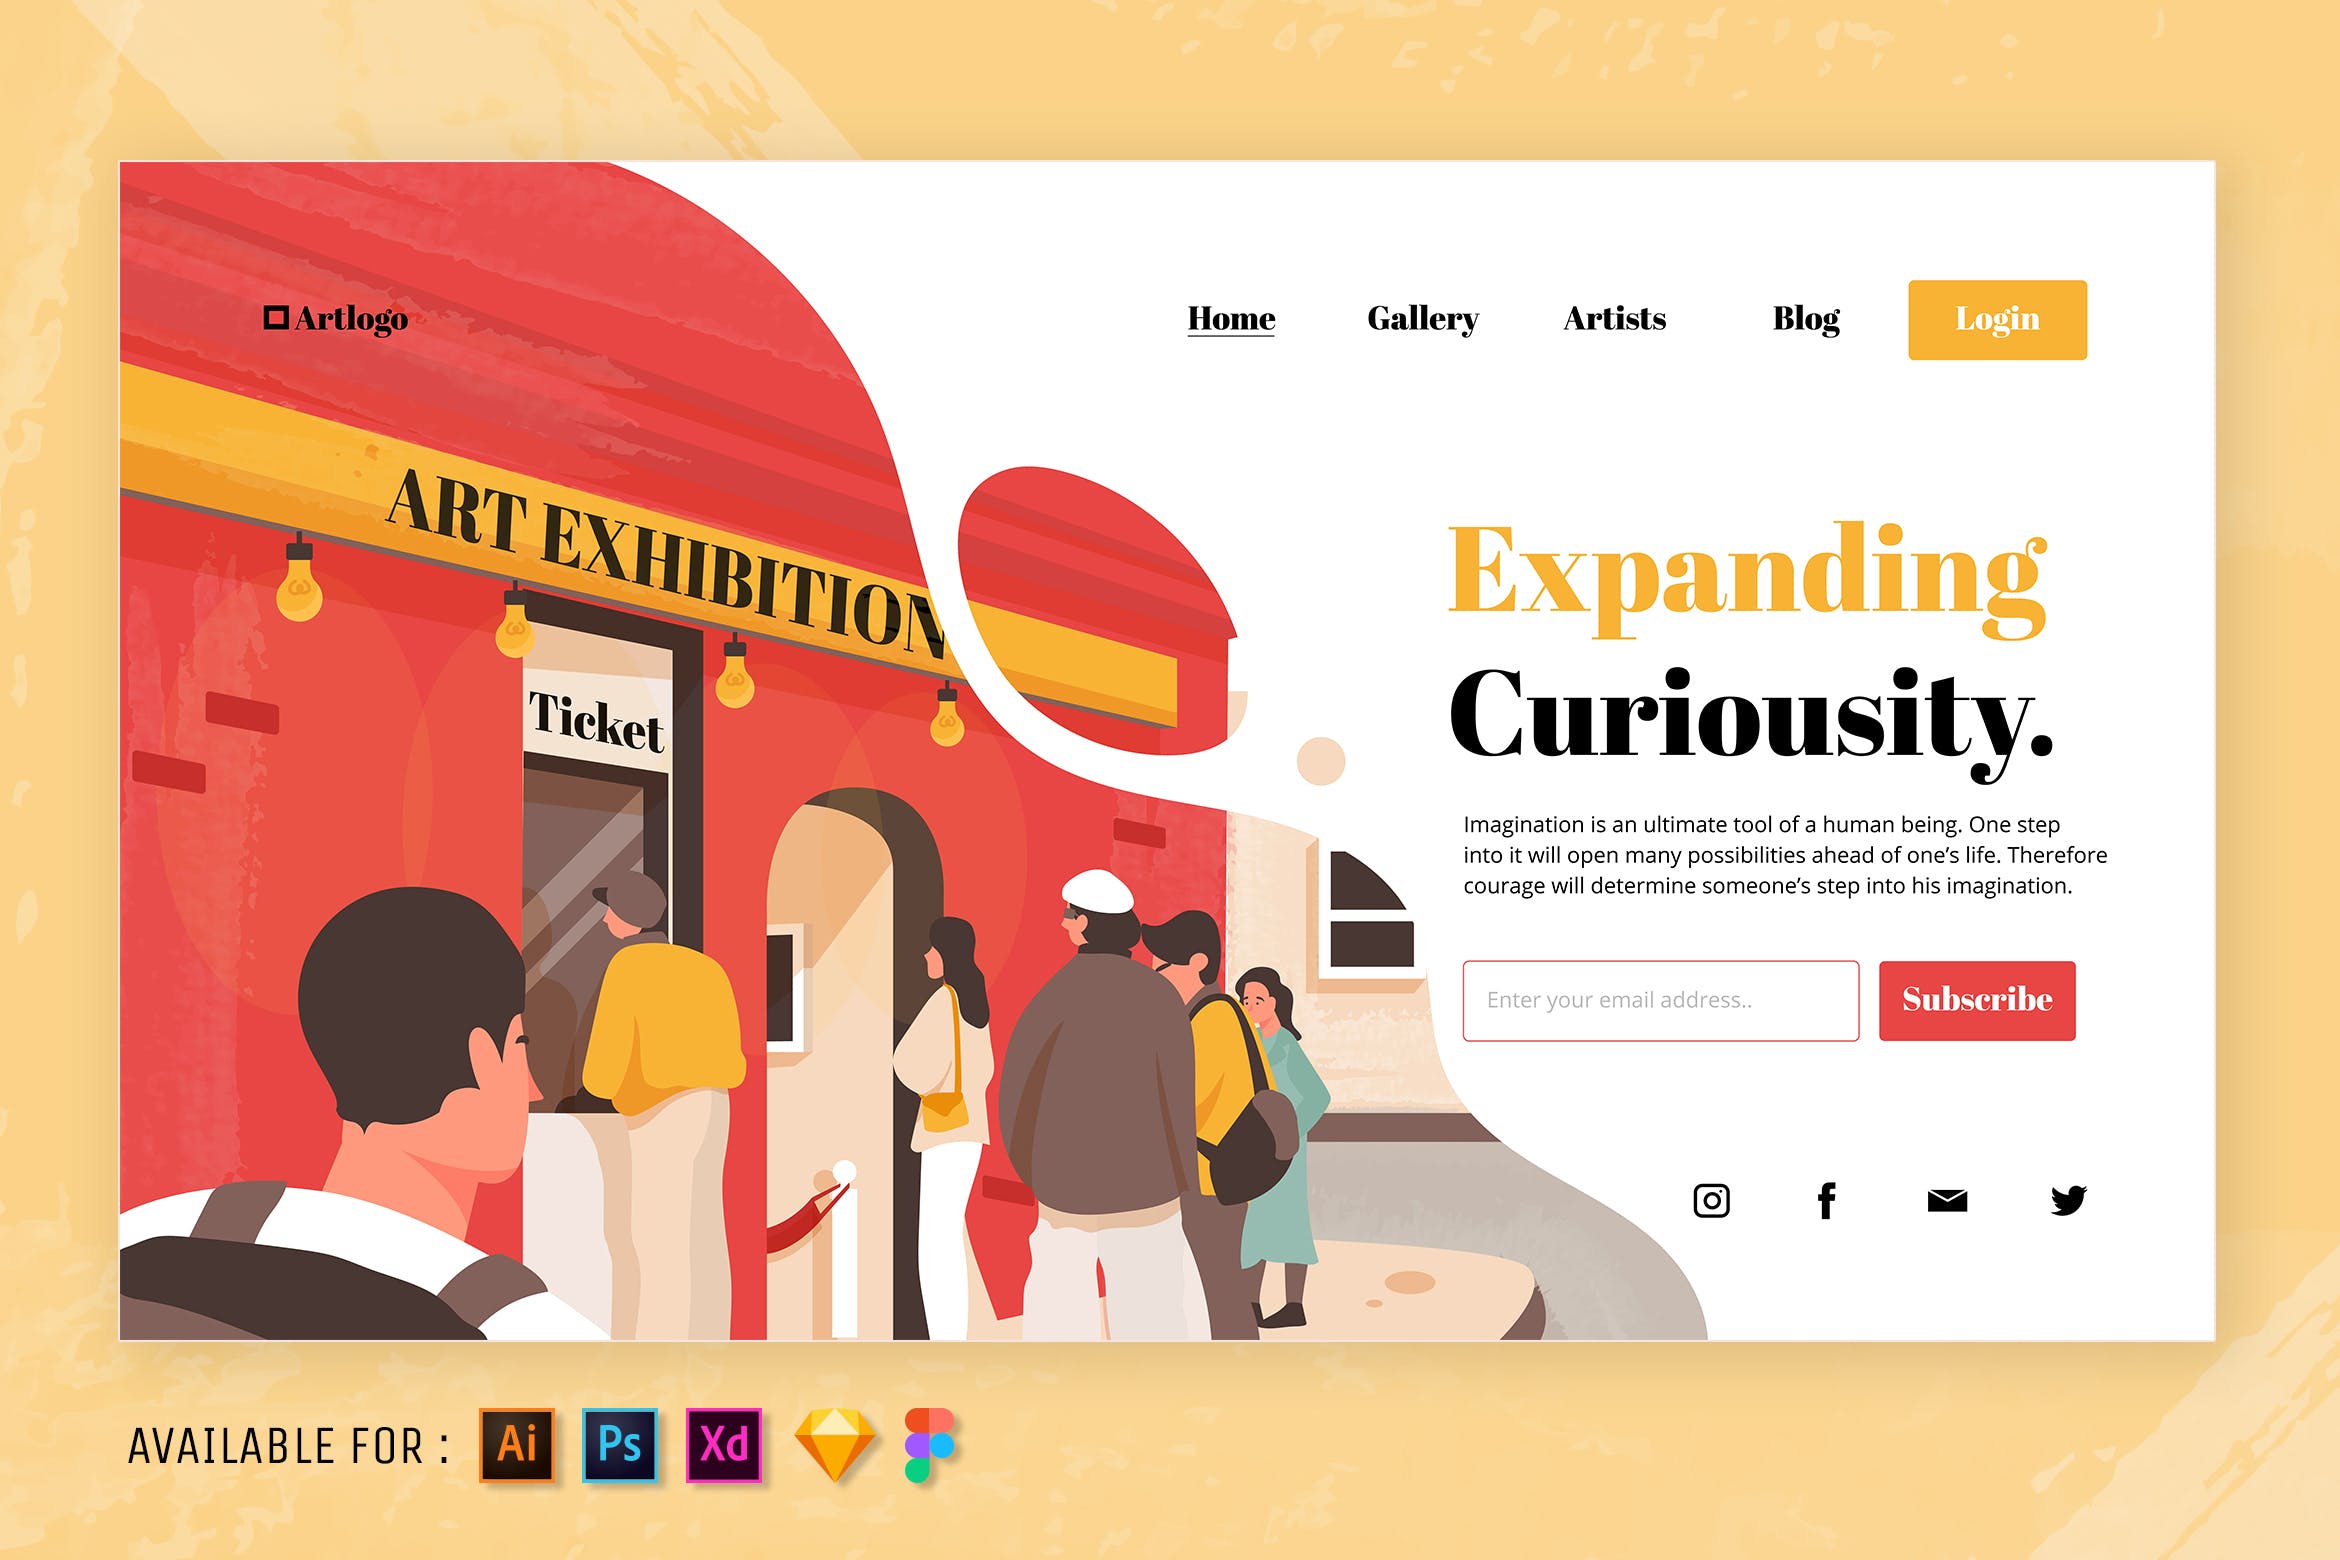 Web网站设计艺术展览主题矢量插画 The Art Exhibition – Web Illustration设计素材模板